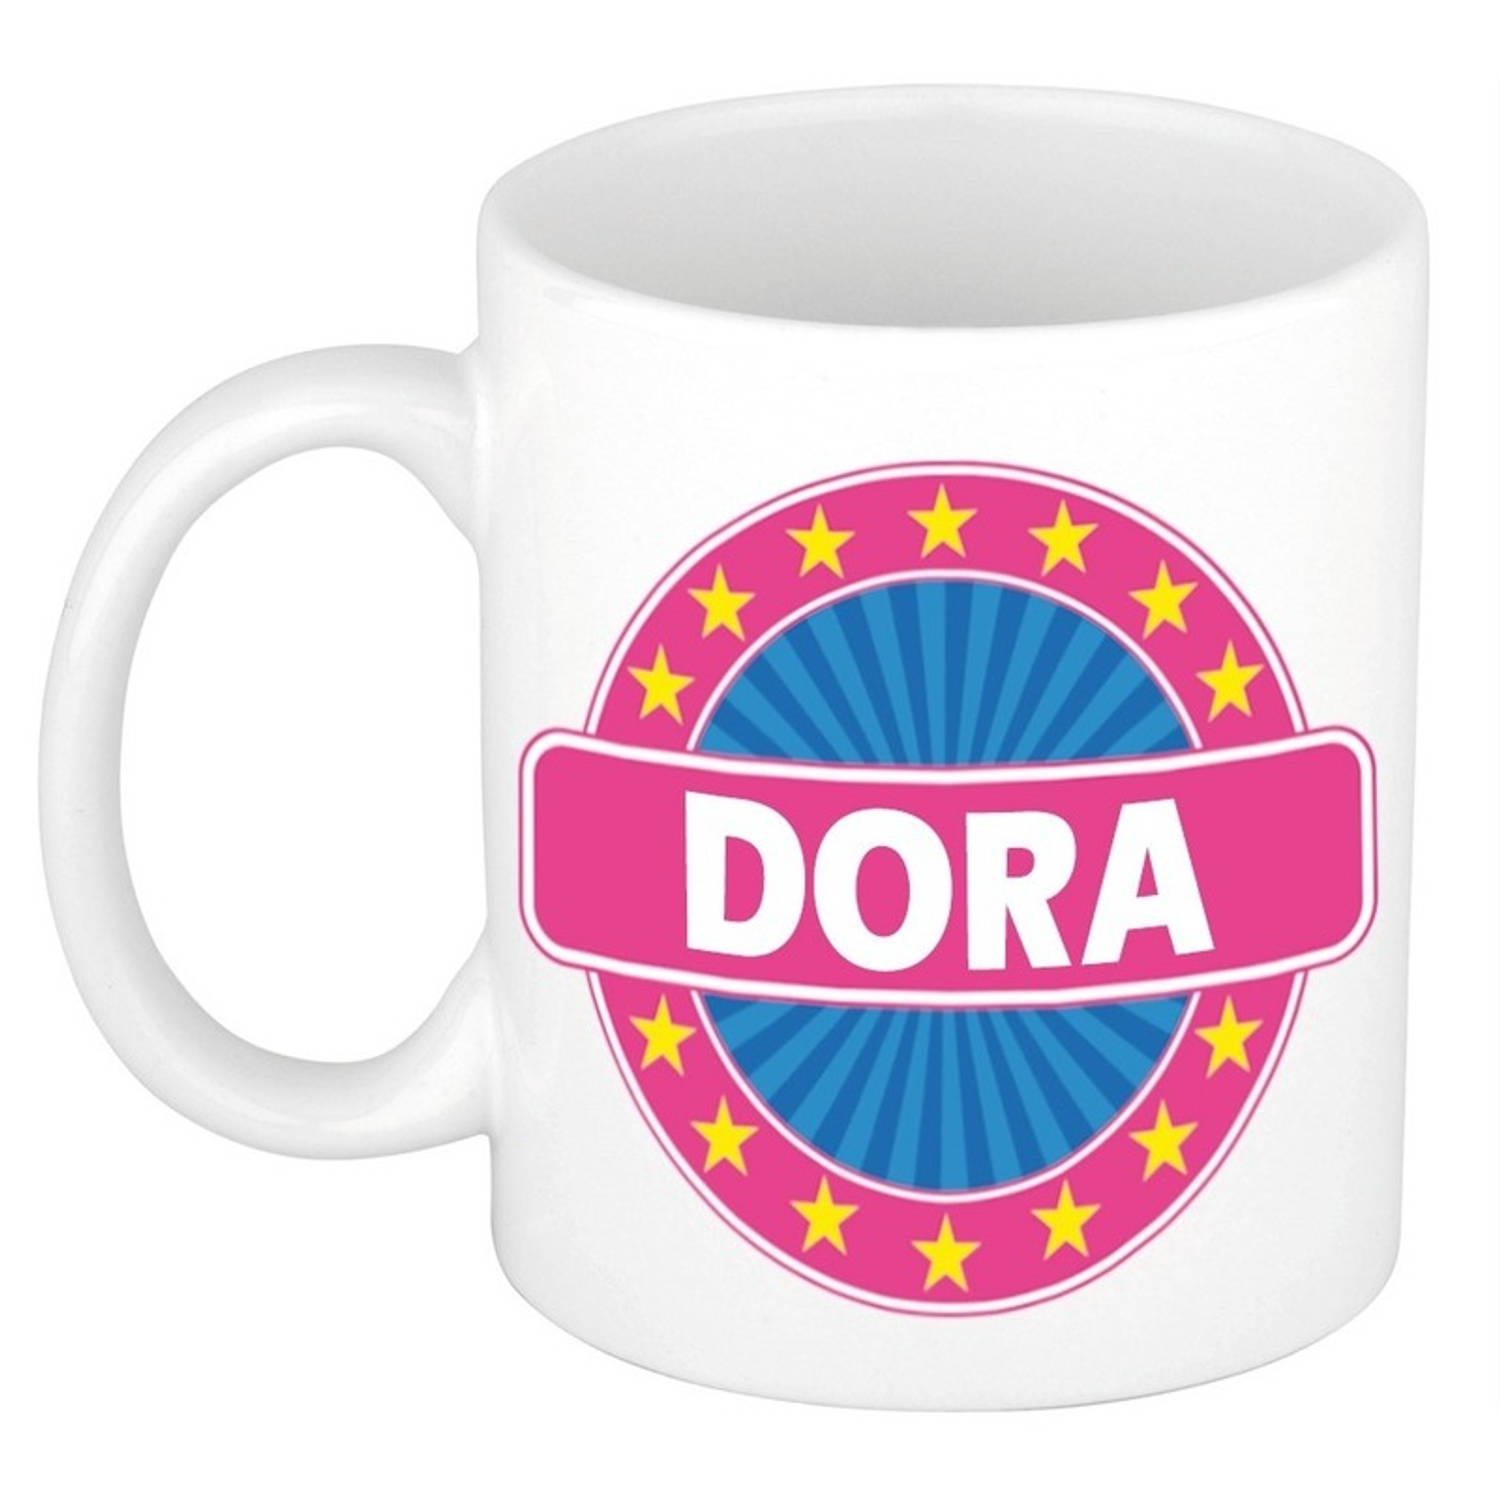 Voornaam Dora koffie/thee mok of beker - Naam mokken